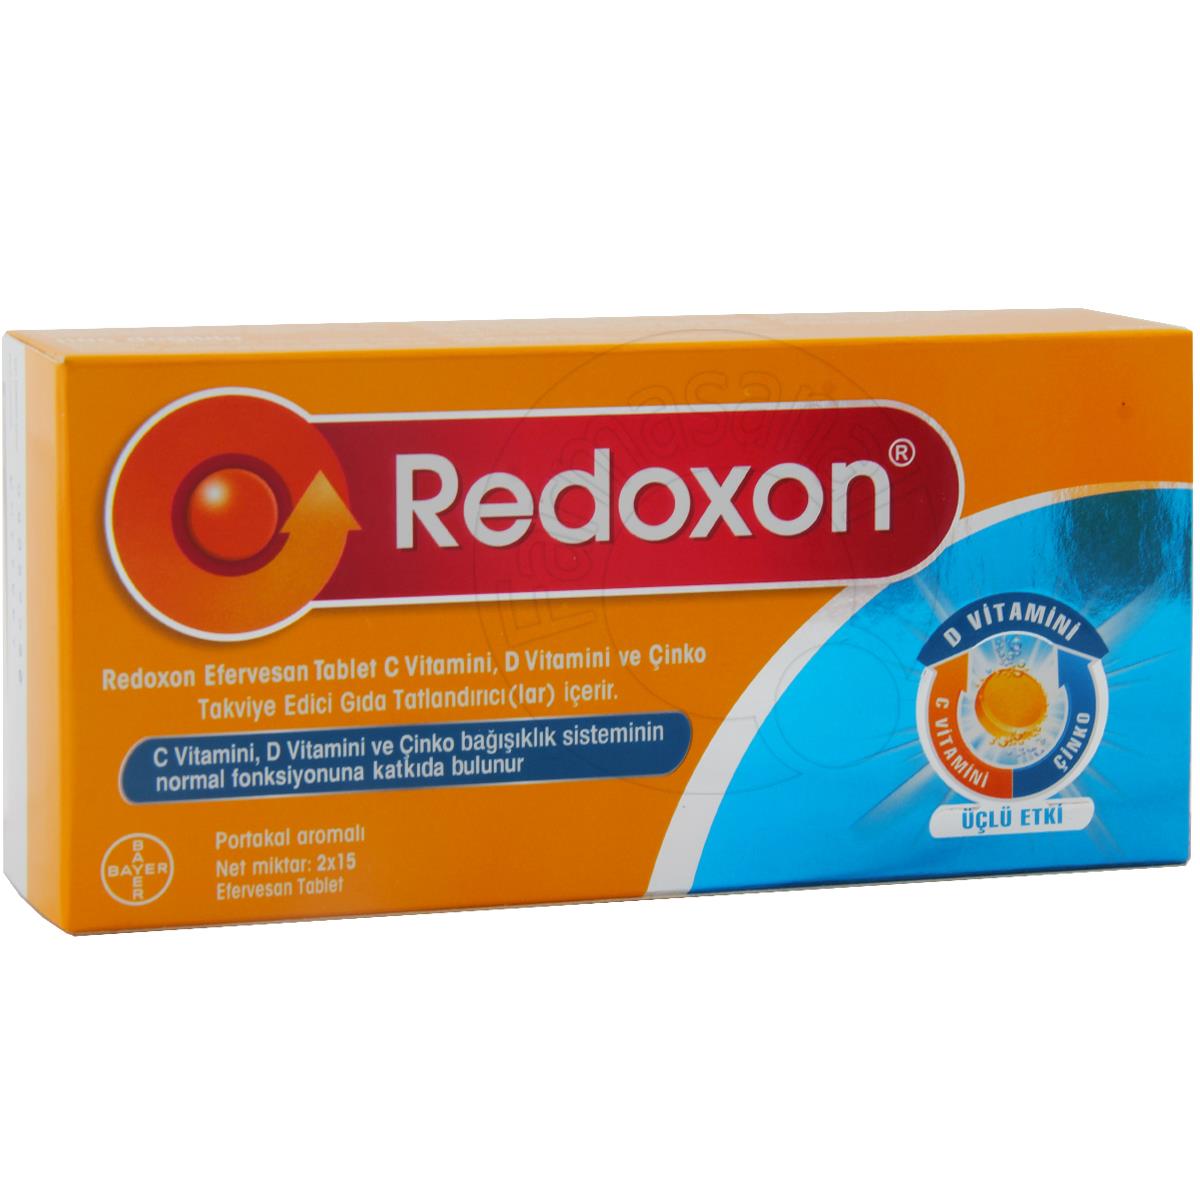 Redoxon Üçlü Etki C Vitamini D Vitamini Çinko Efervesan 2x15 Tablet